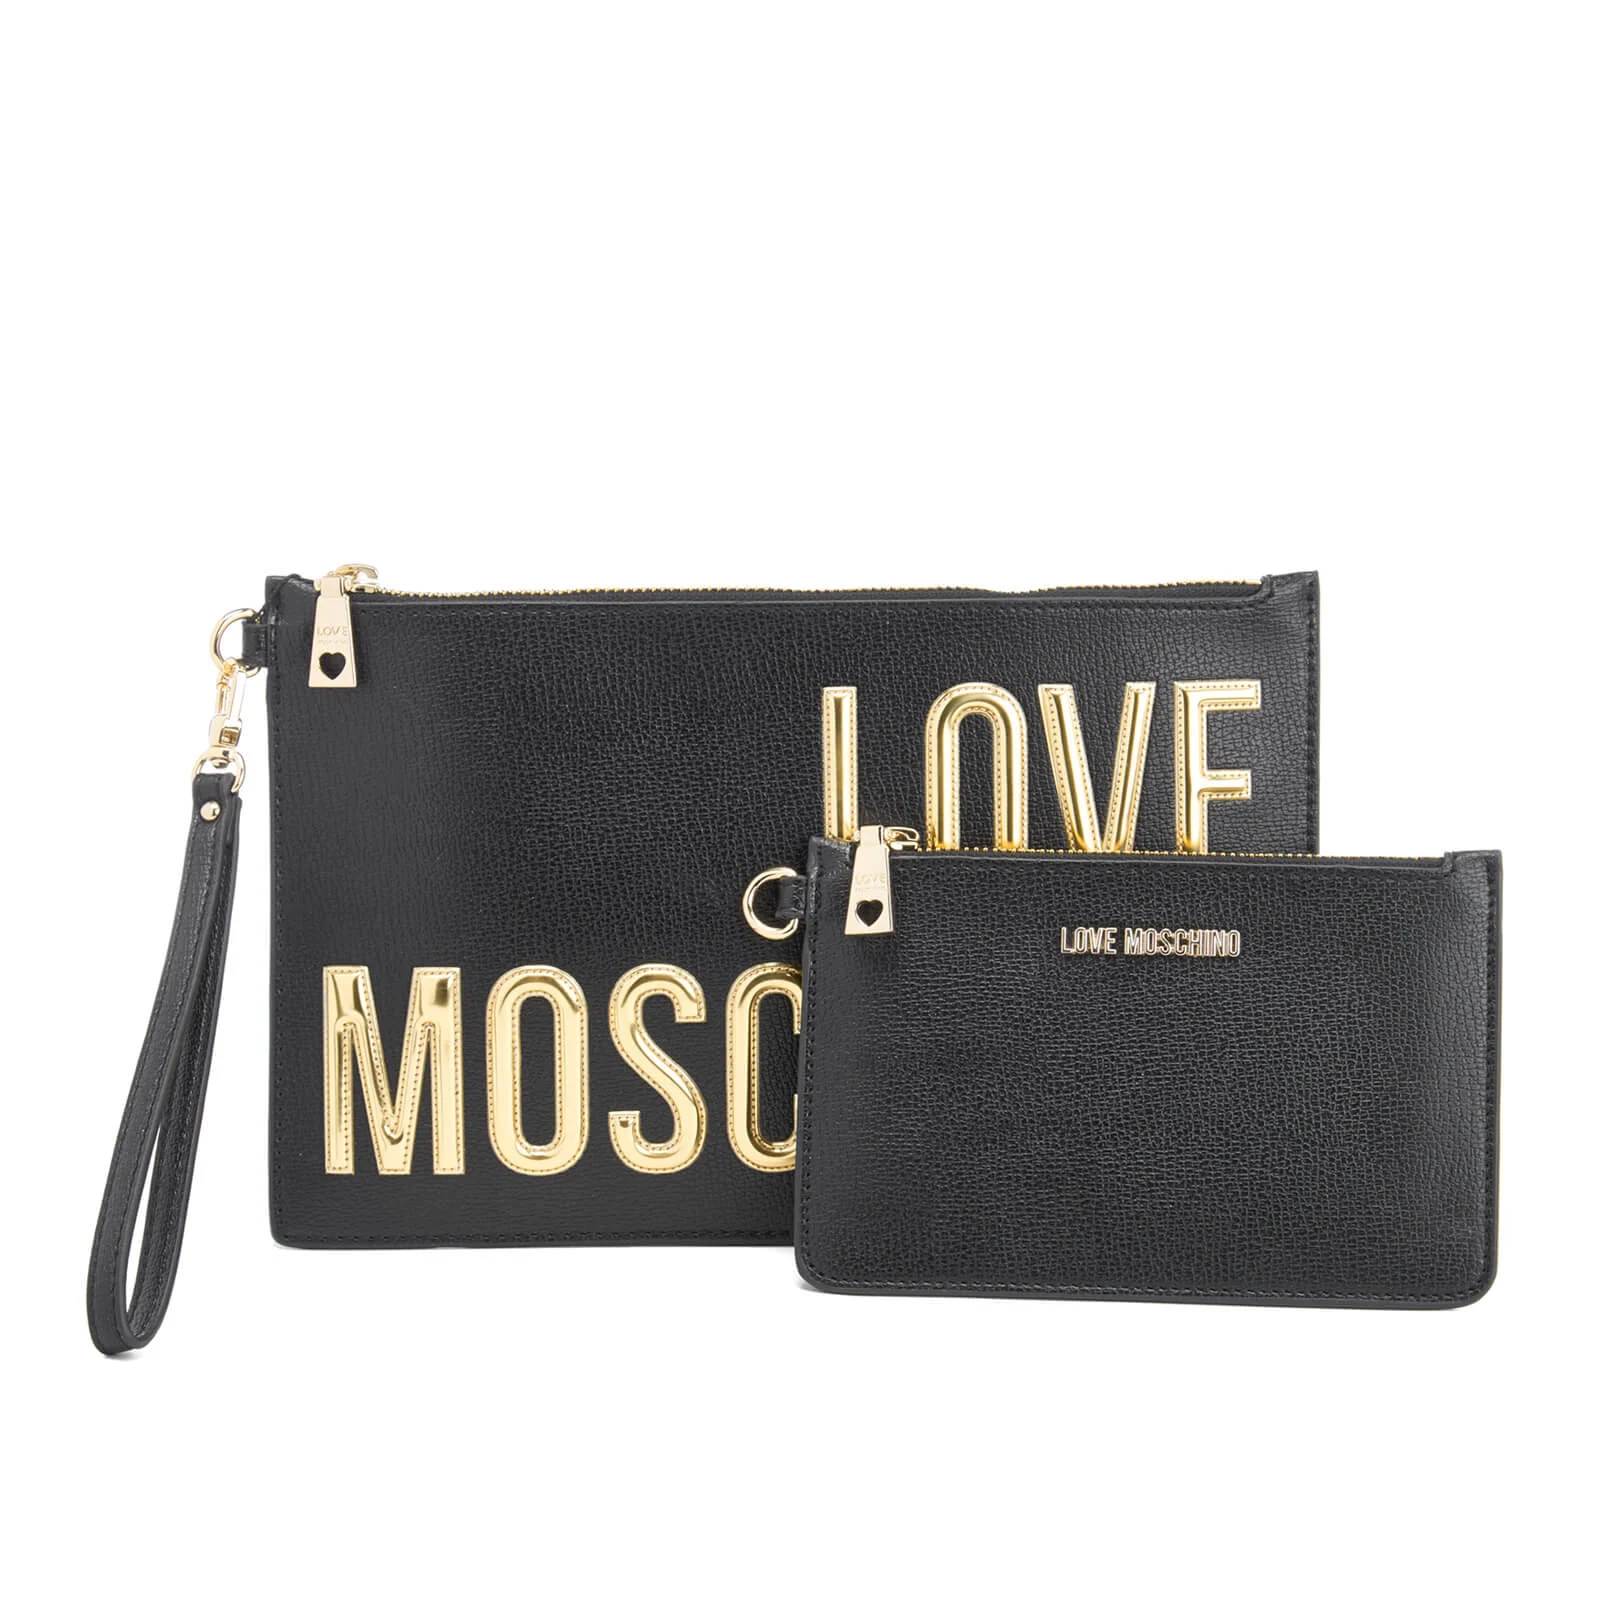 Love Moschino Women's Logo Clutch Bag - Black Image 1